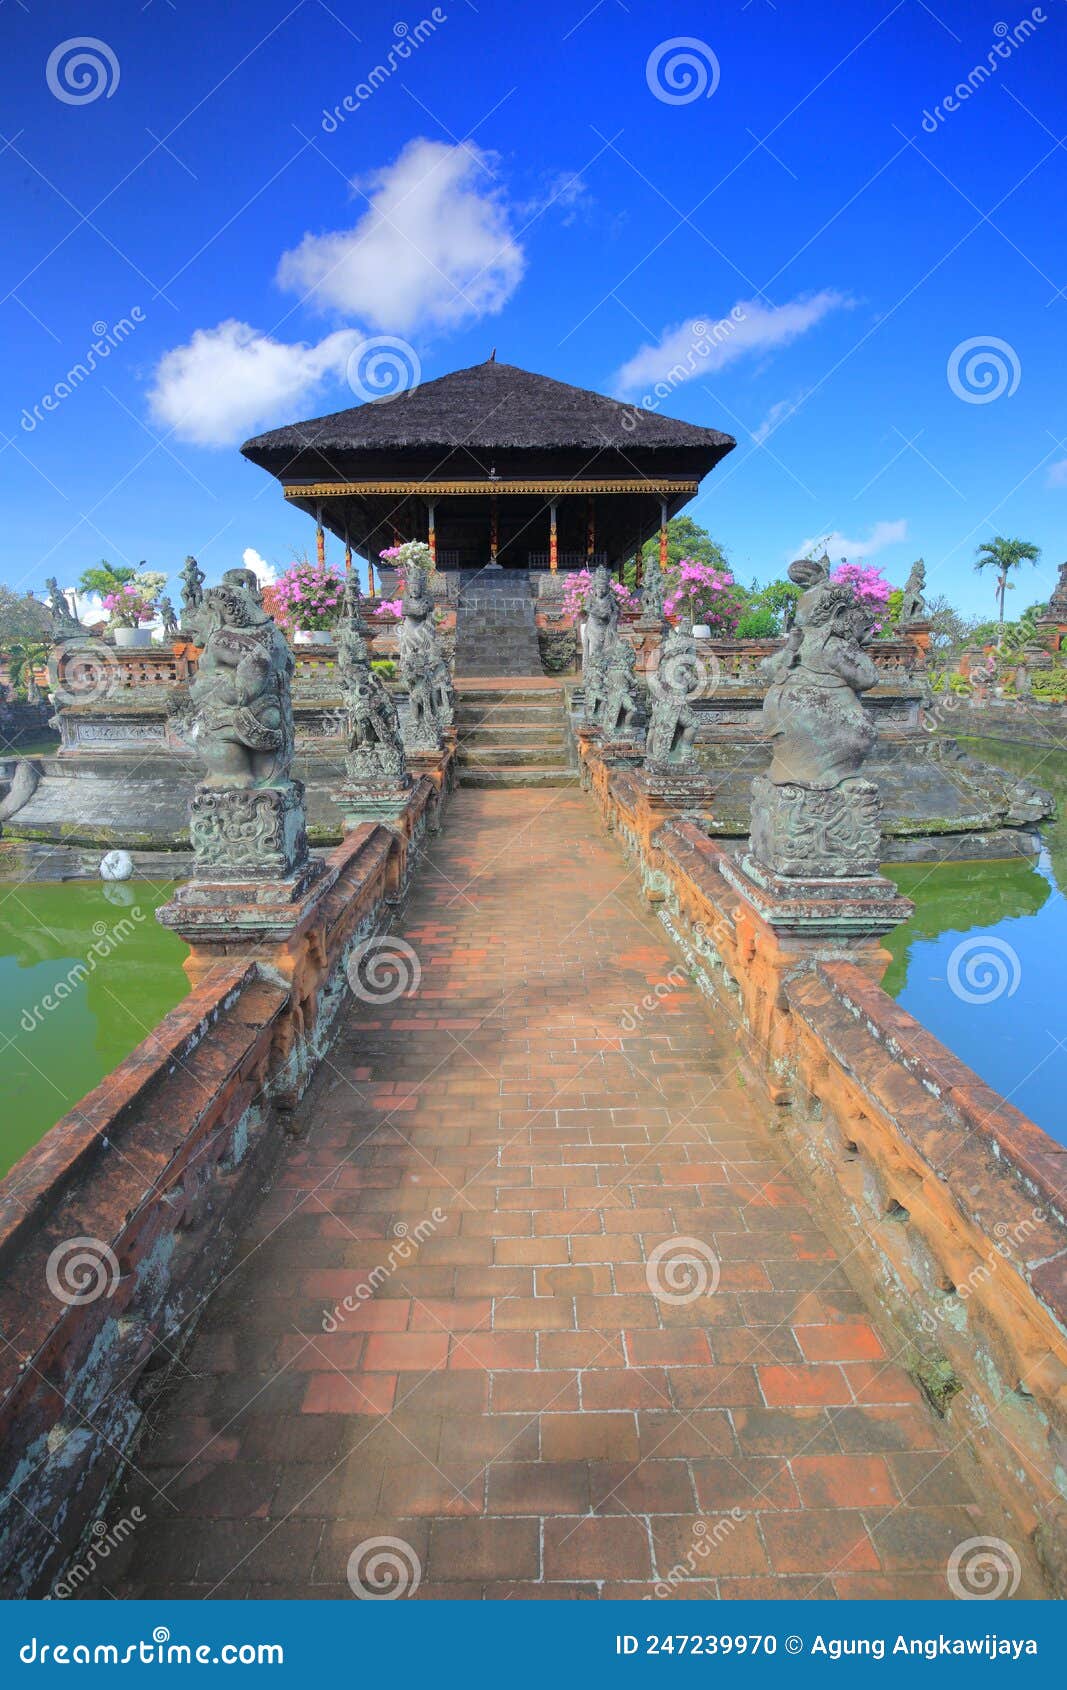 kertha gosa pavilion klungkung palace bali indonesia